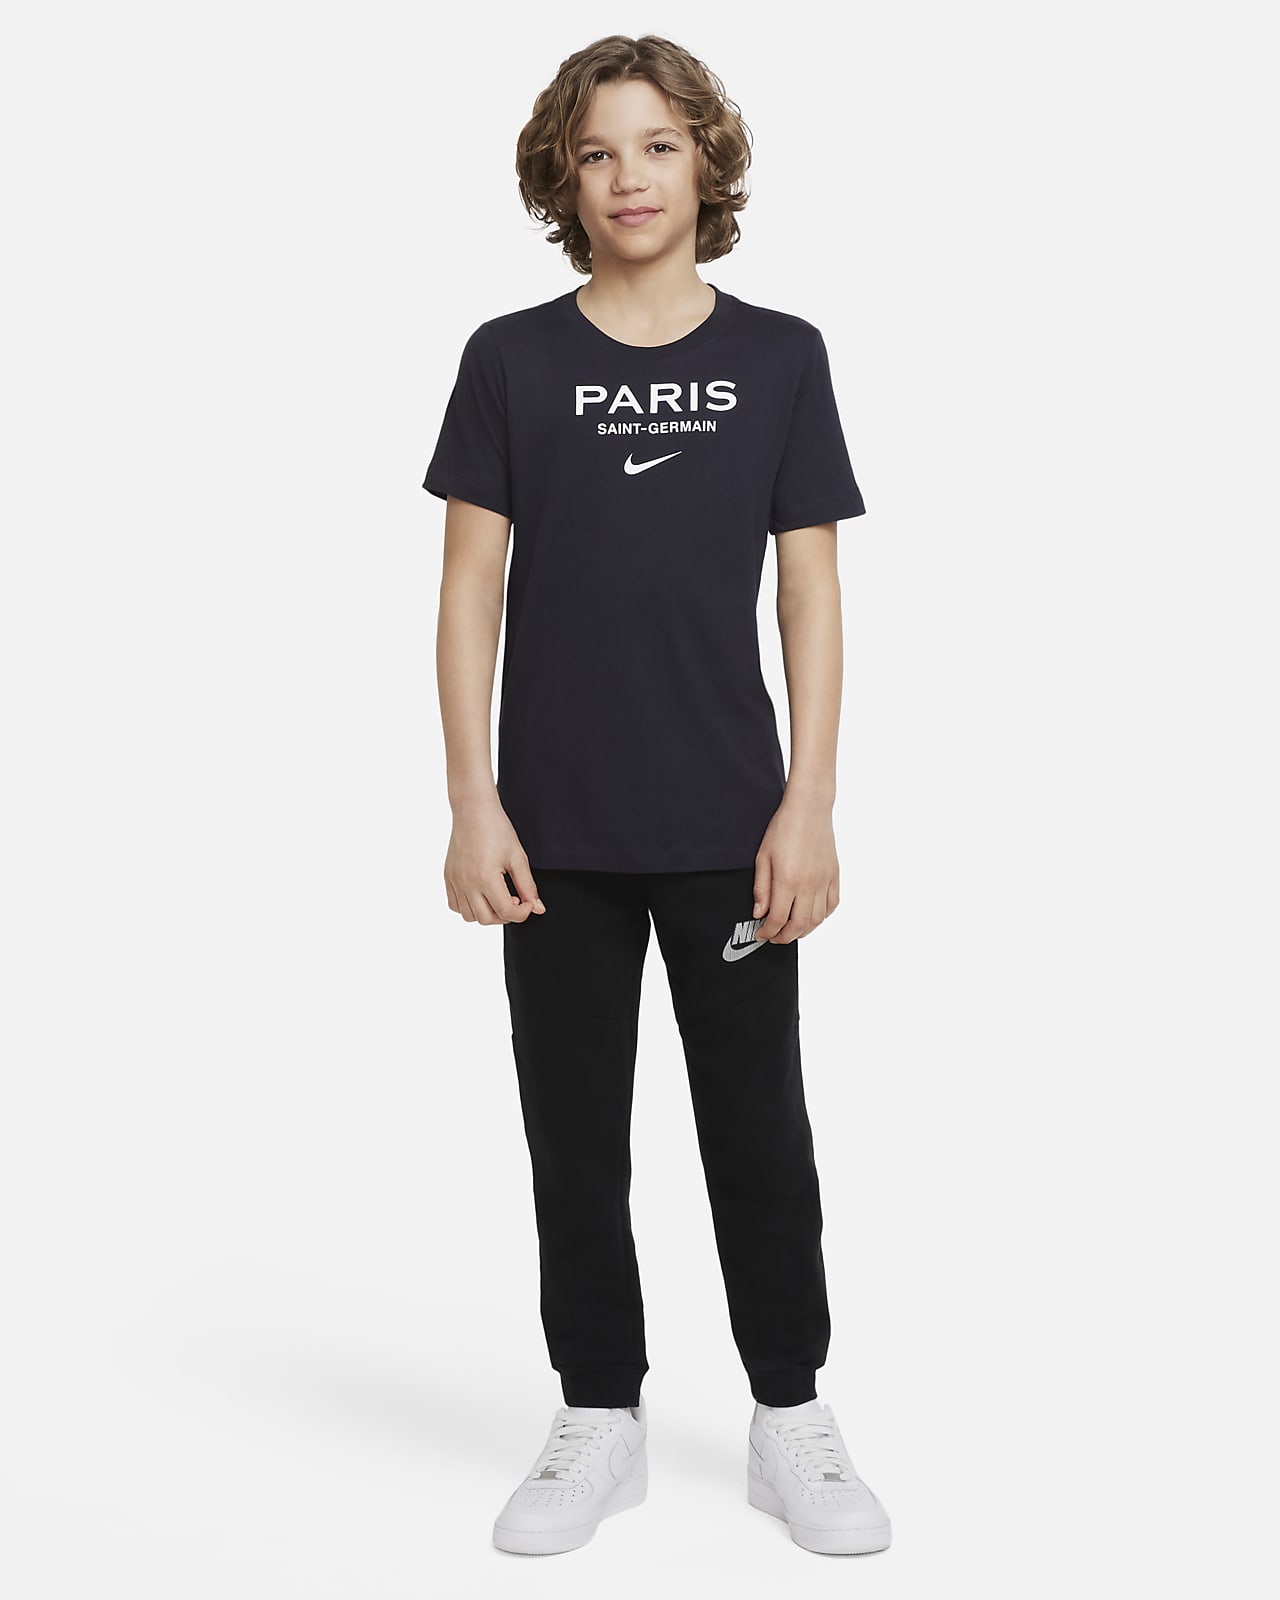 dubbel Chip Definitief Paris Saint-Germain Swoosh Big Kids' Soccer T-Shirt. Nike.com